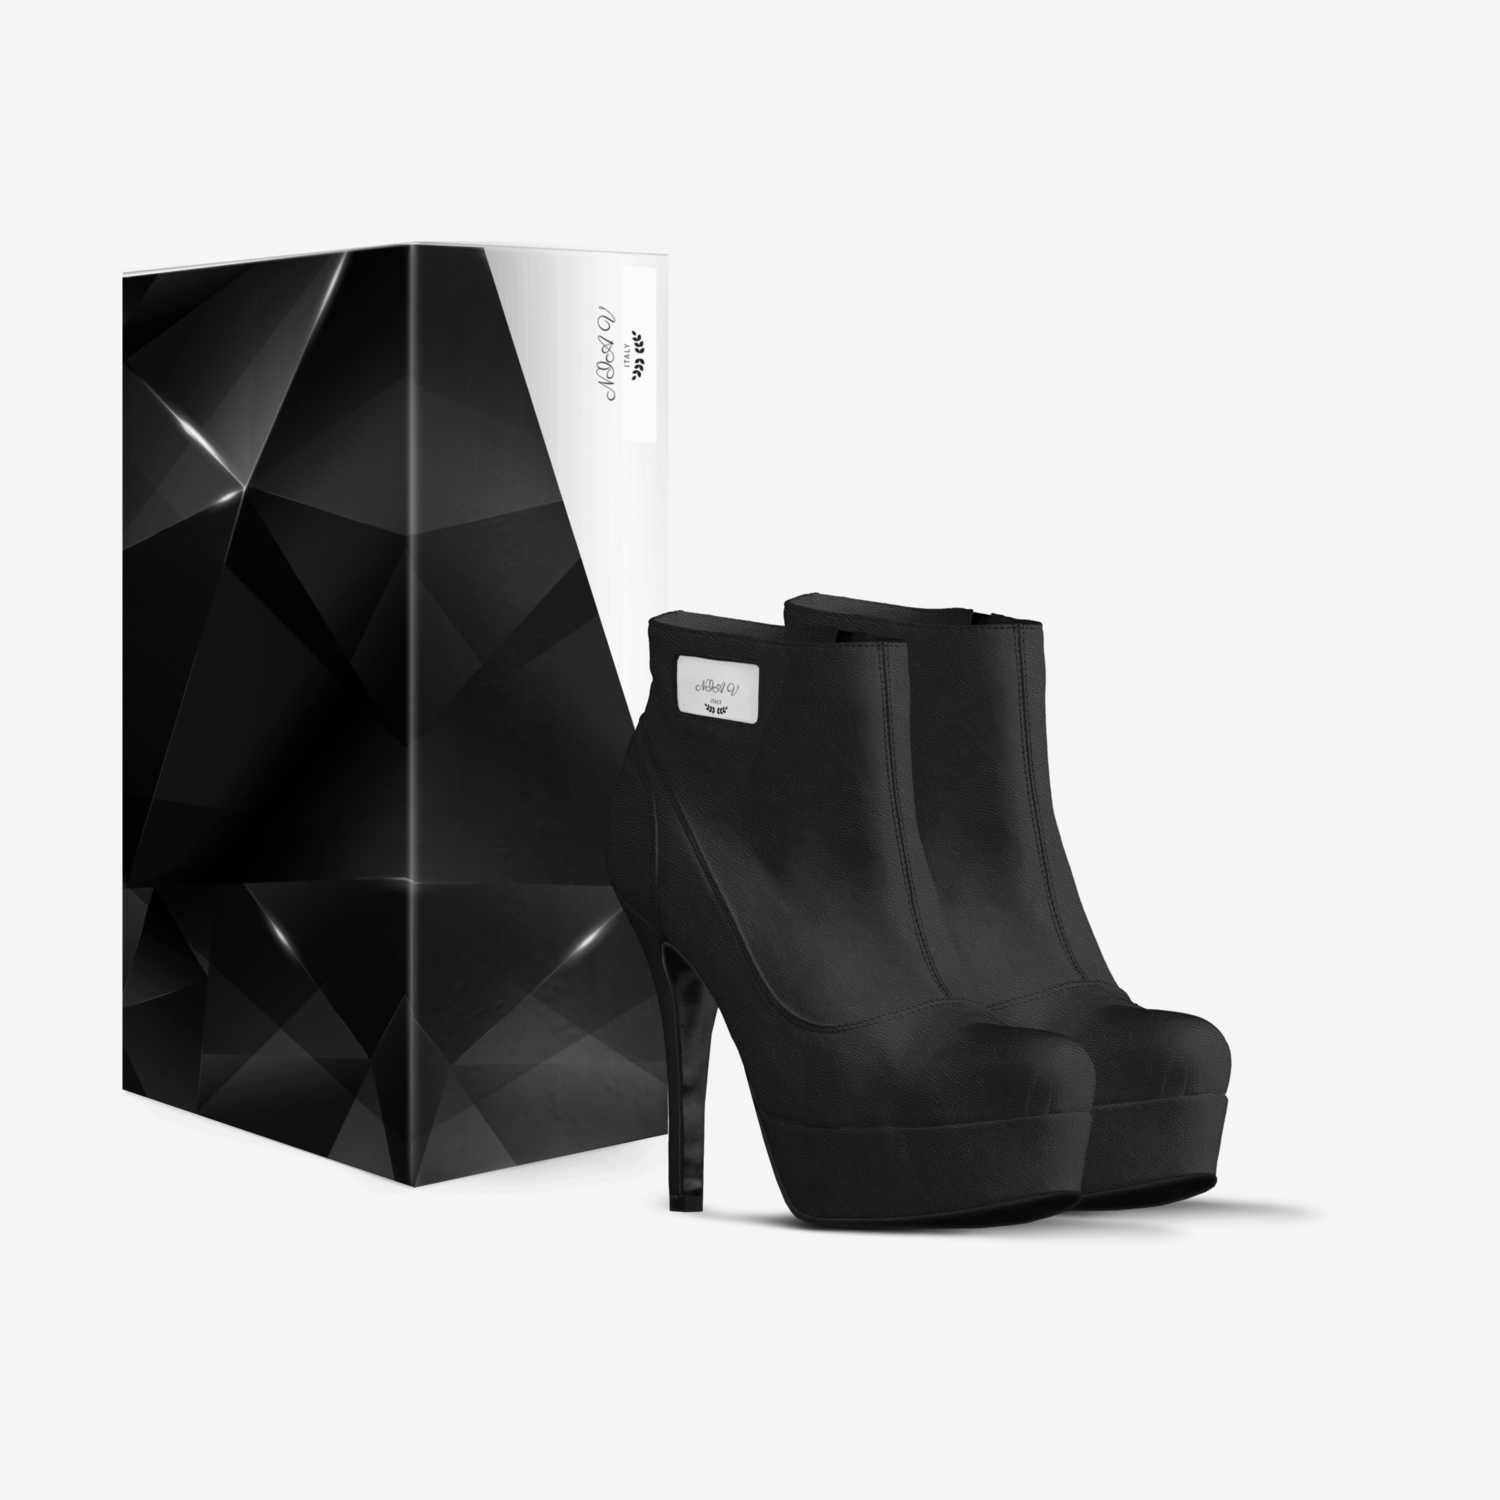 NIA V custom made in Italy shoes by Aniiahs Madden | Box view